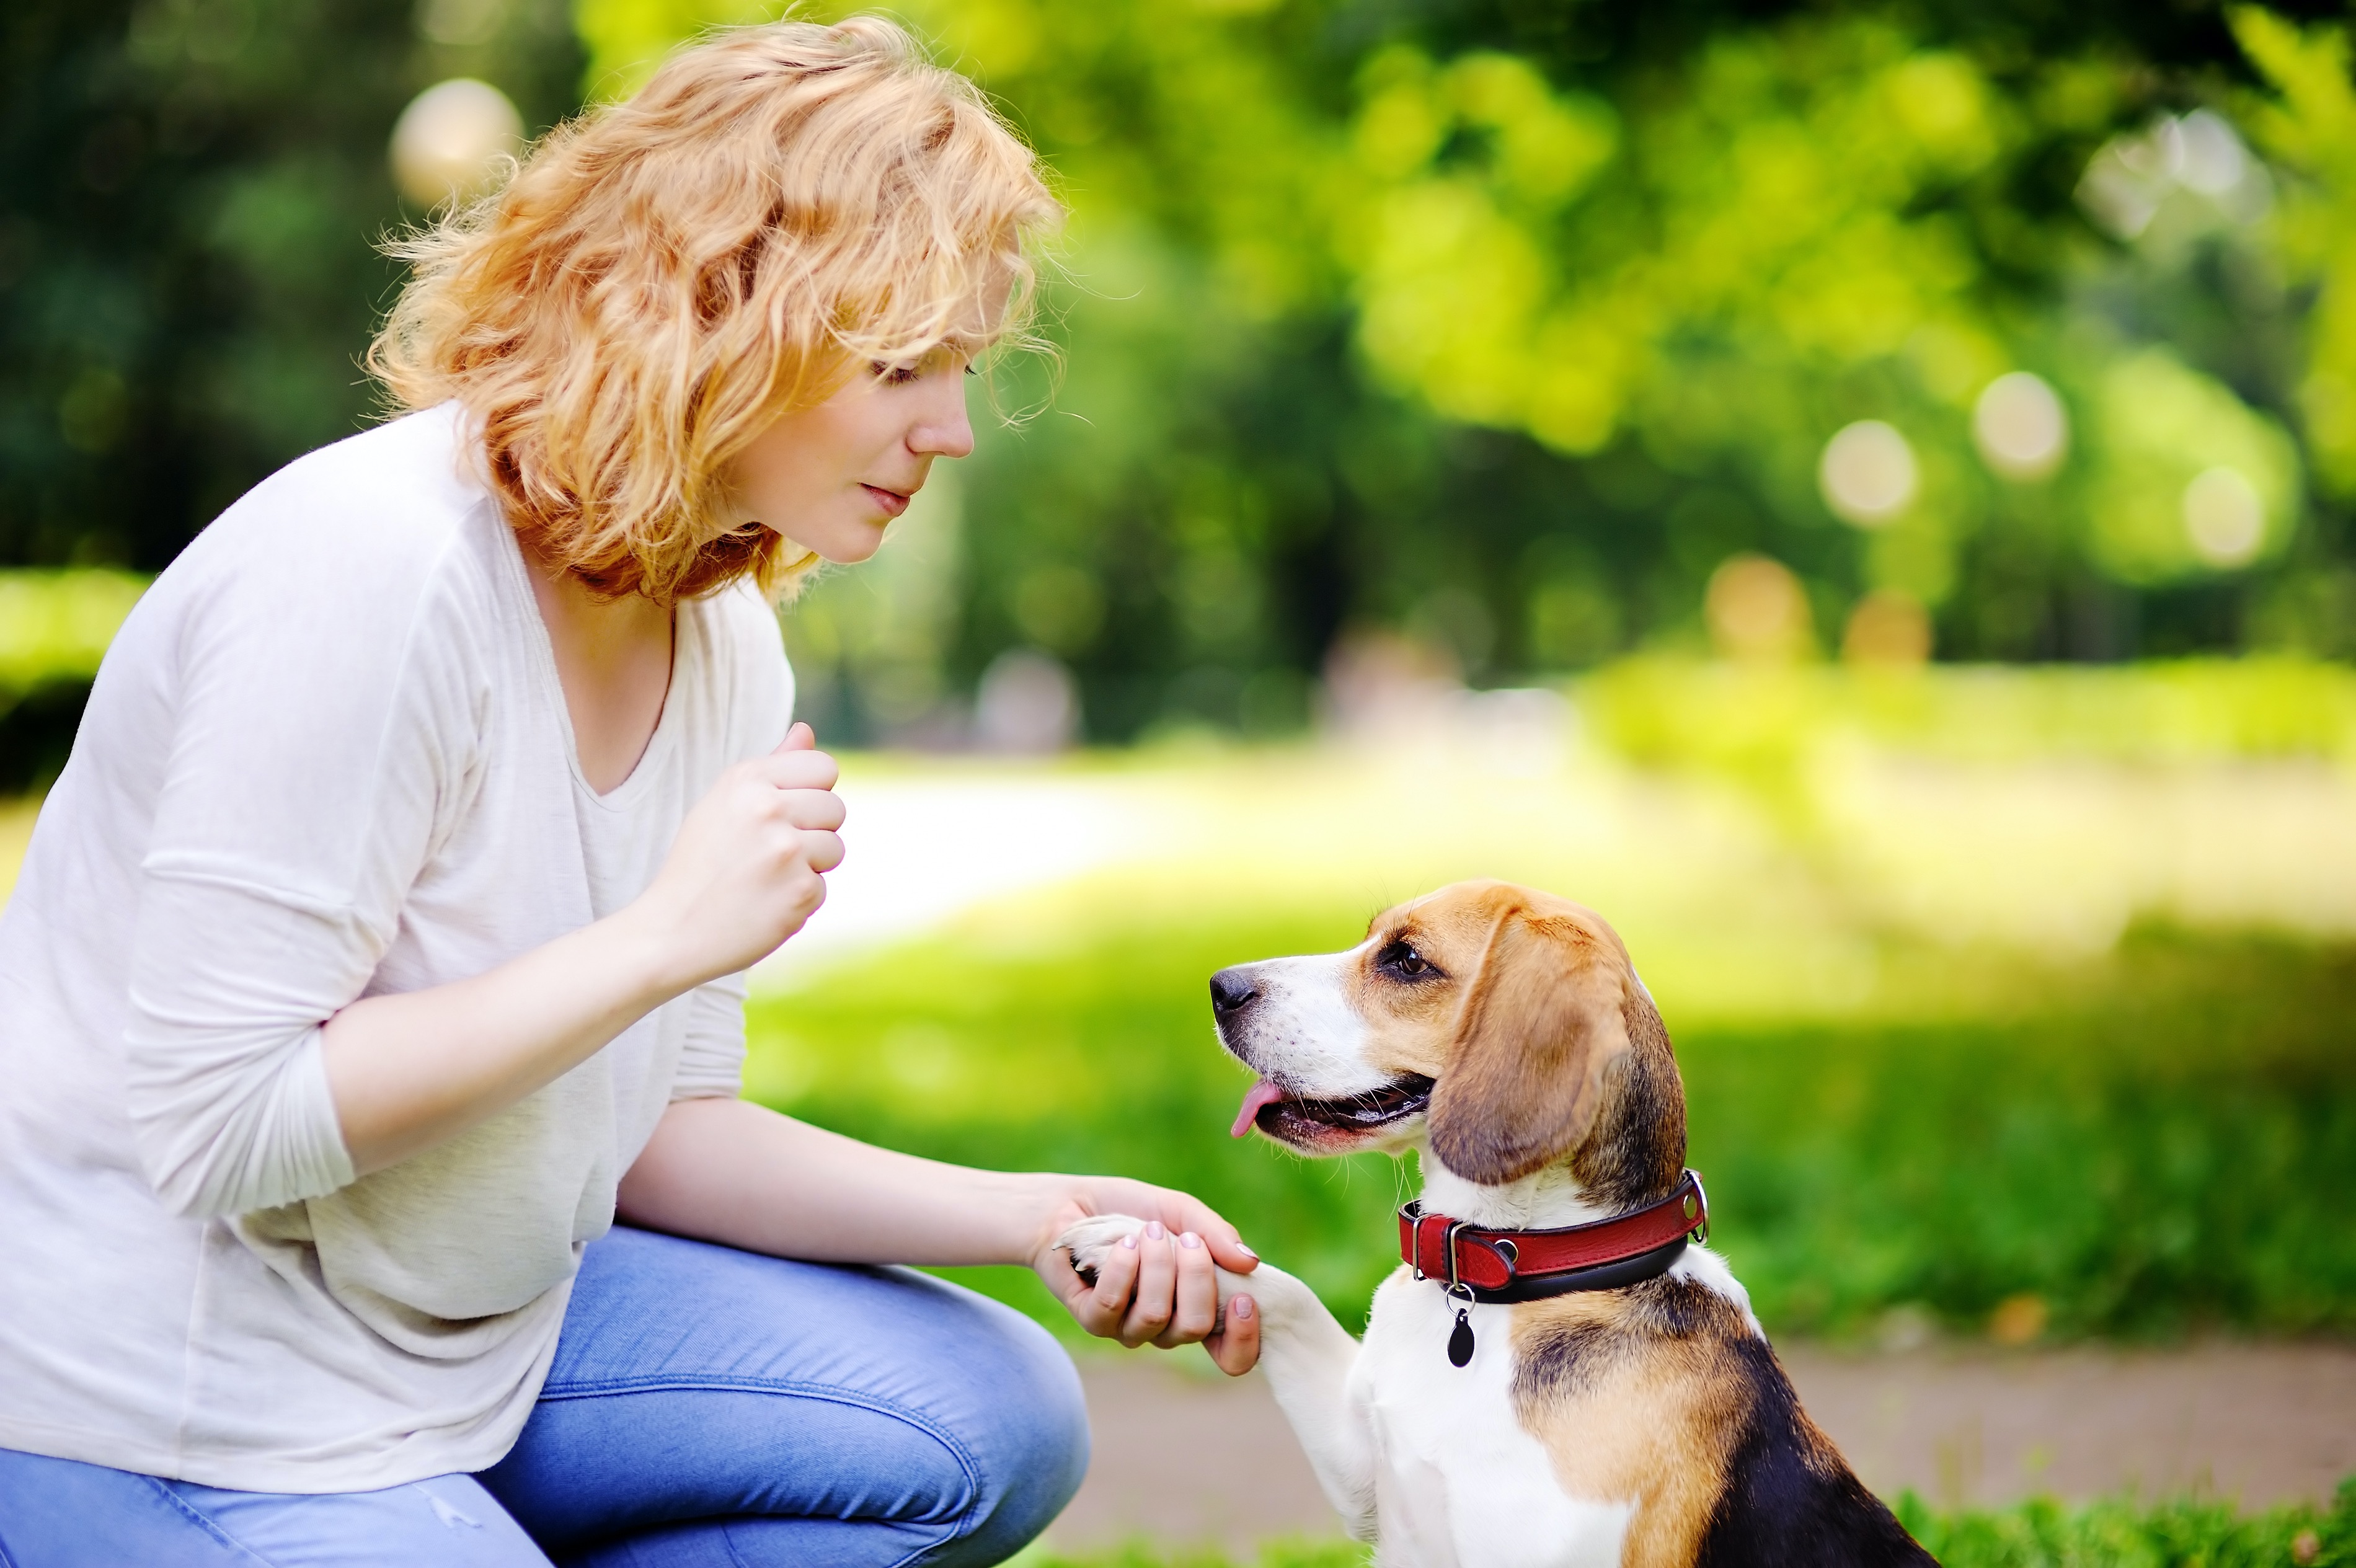 A woman training a beagle dog